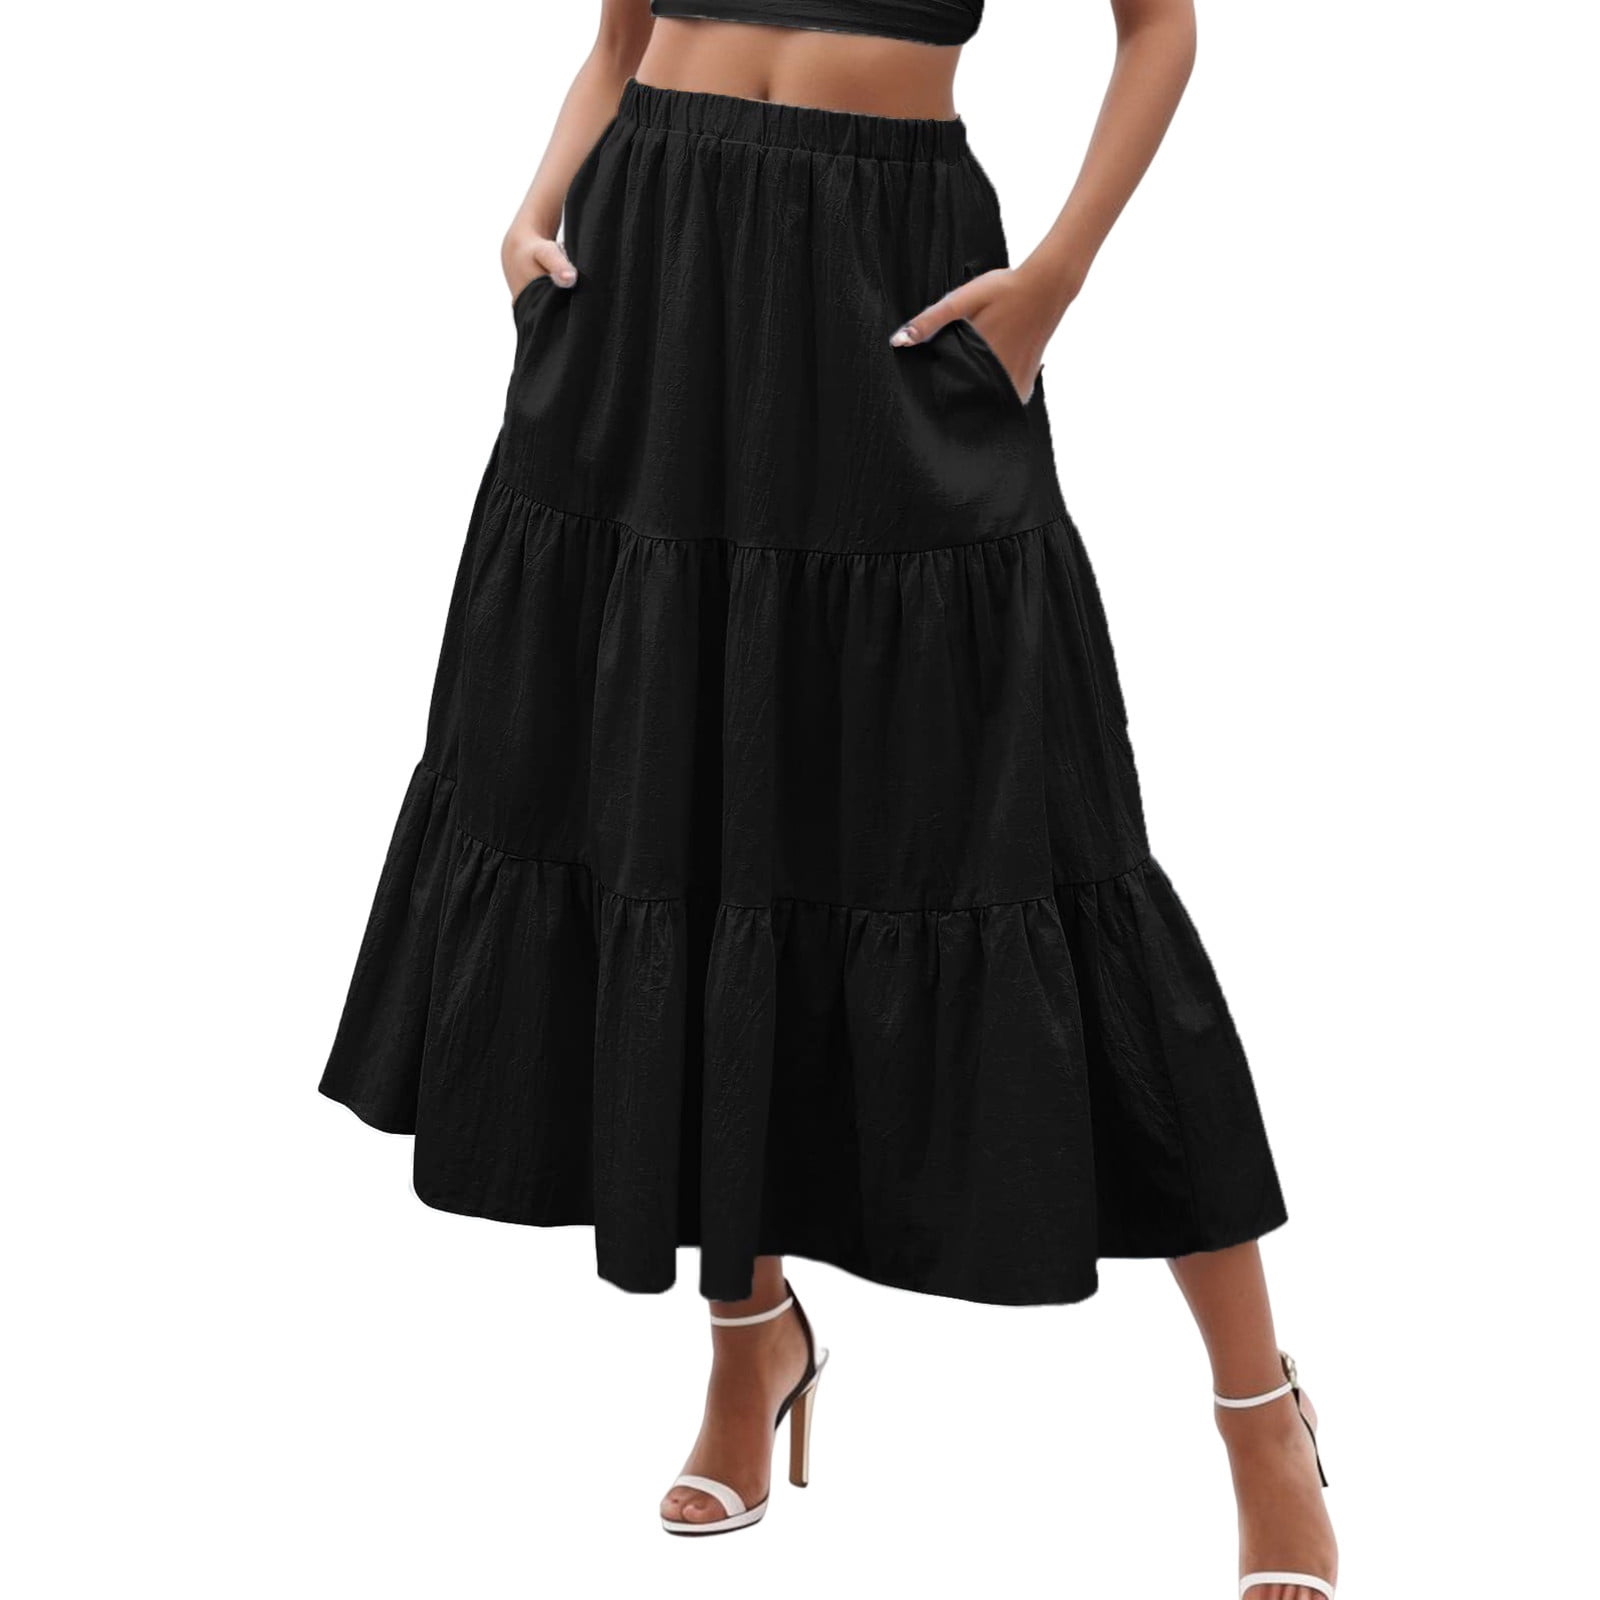 B91xZ Women Skirts for Summer Casual High Waist Pleated A-Line Midi ...